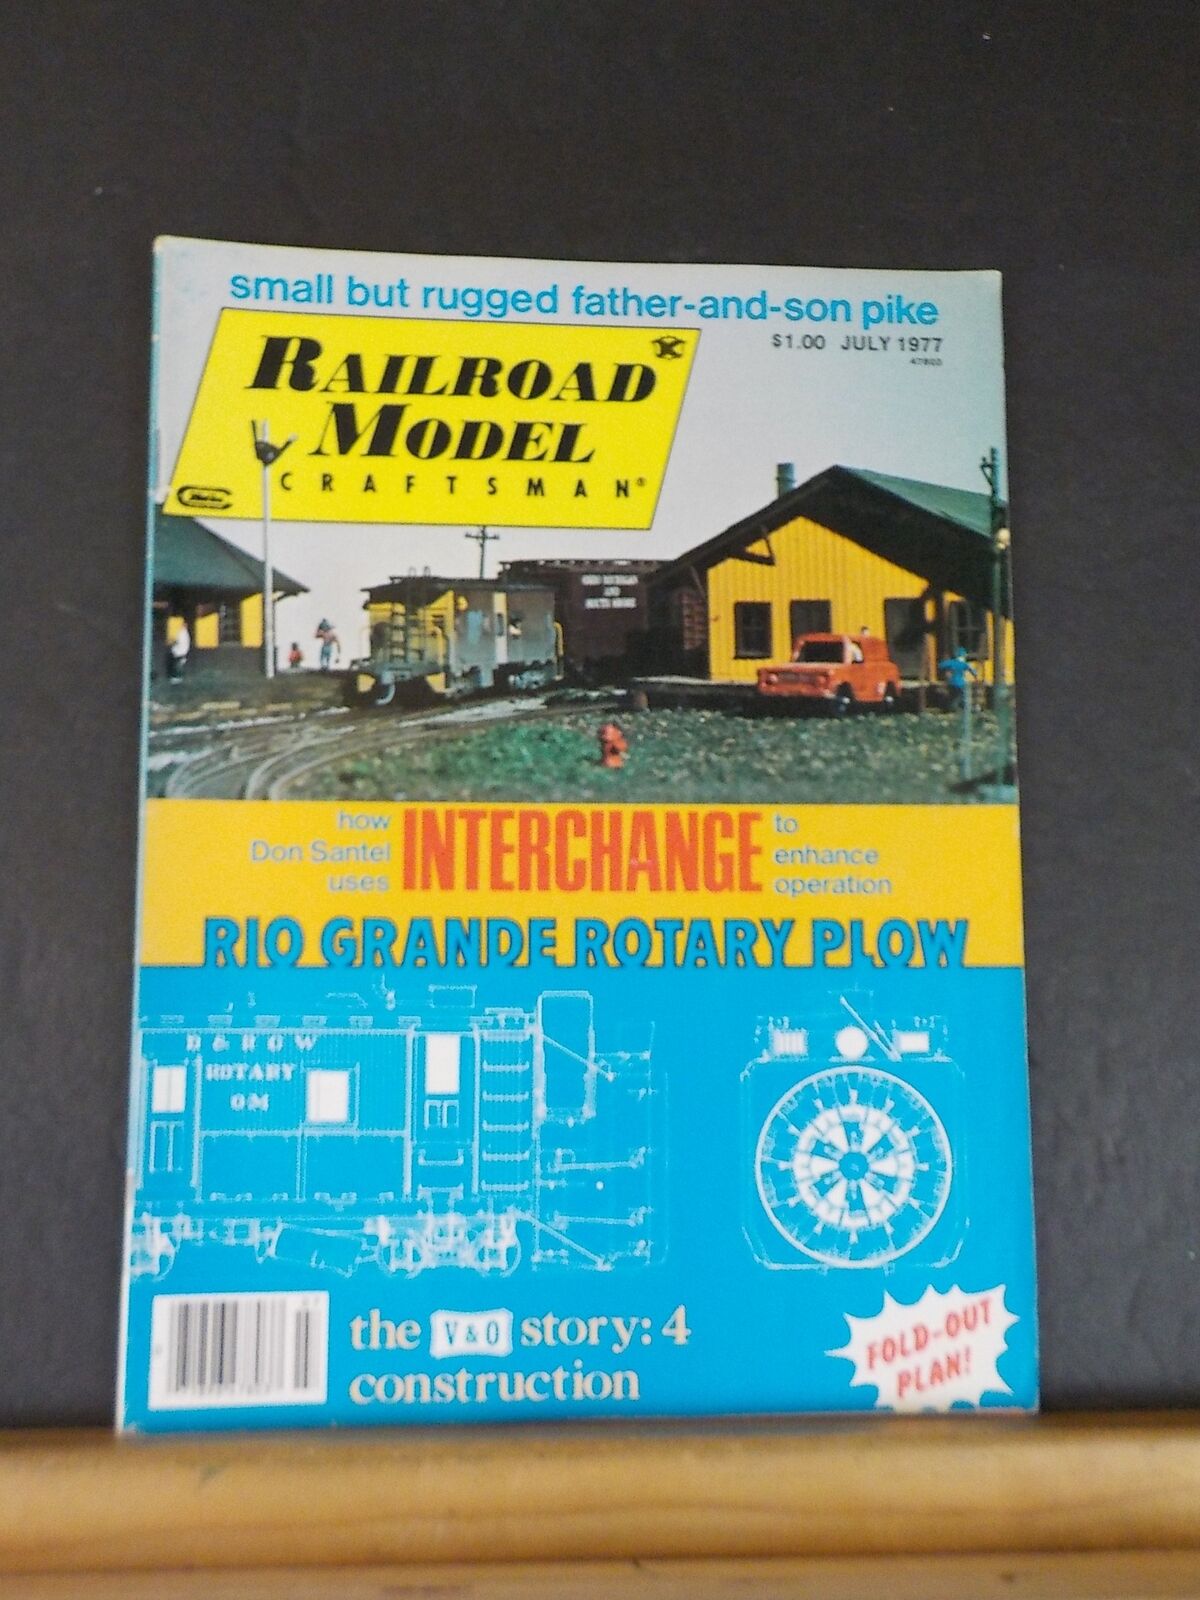 Railroad Model Craftsman Magazine 1977 July RG Rotary plow Interchange to enhanc